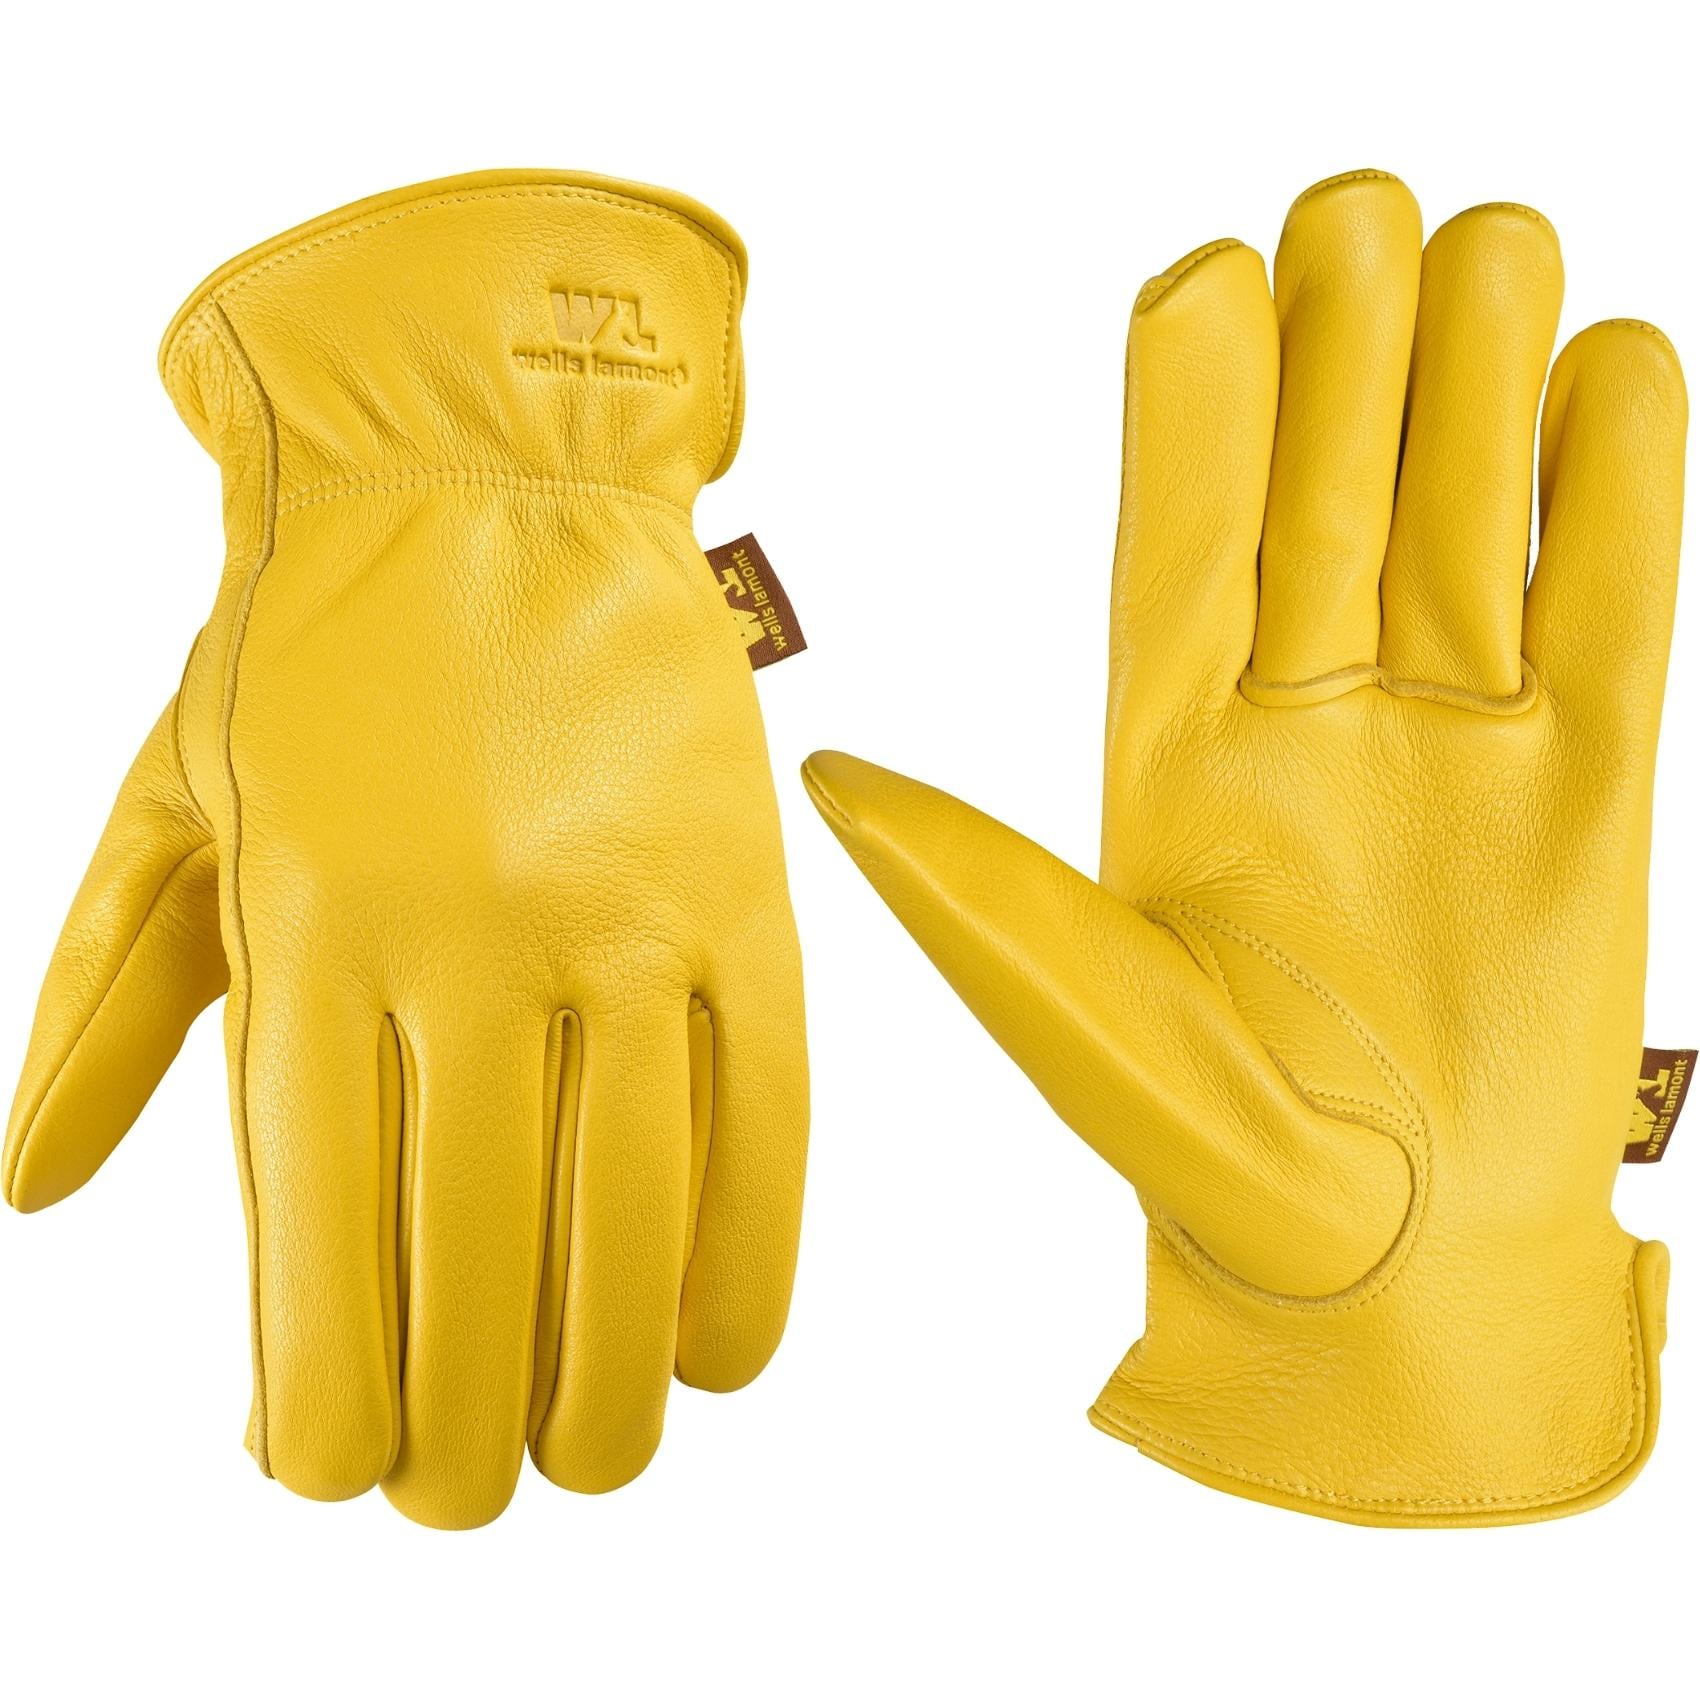 Men's Coated Grip Work Gloves with Latex Coating, Medium (Wells